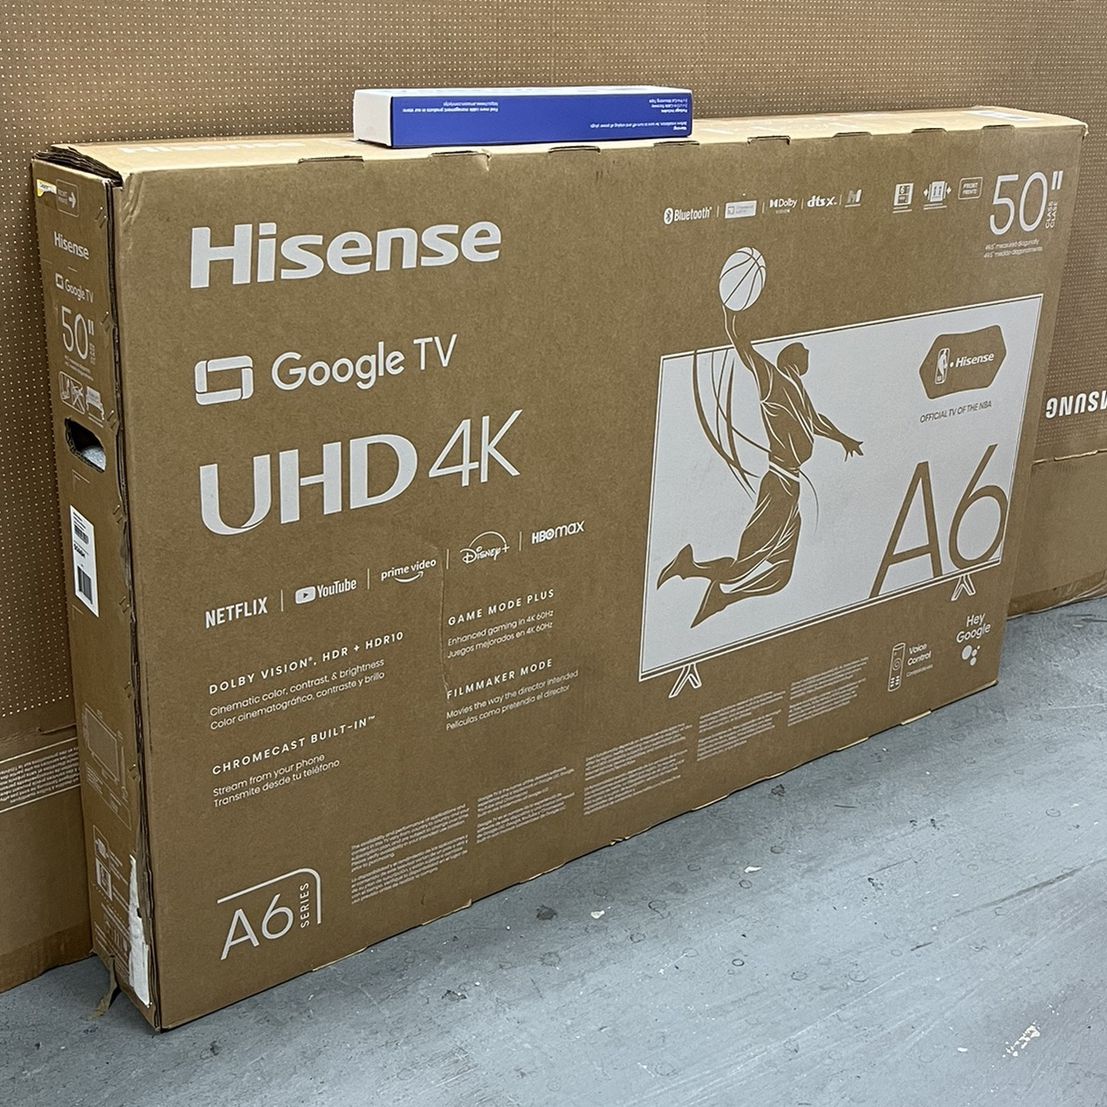 Hisense 50” A6 4K HDR Smart Tv